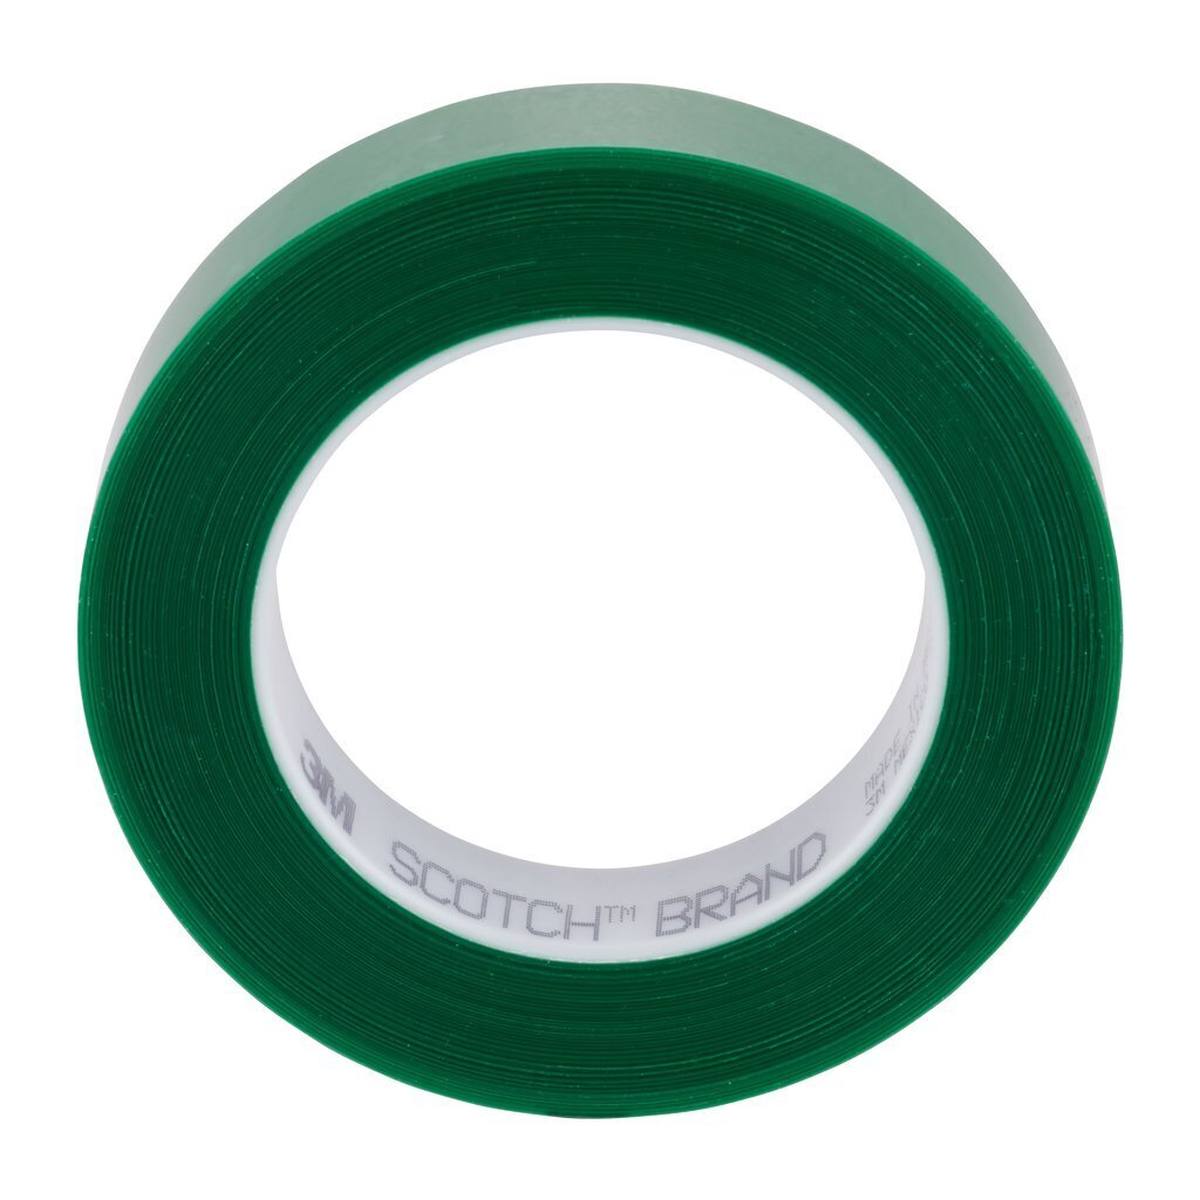 3M ruban adhésif haute température polyester 851, vert, 25,4 mm x 66 m, 101,6 µm